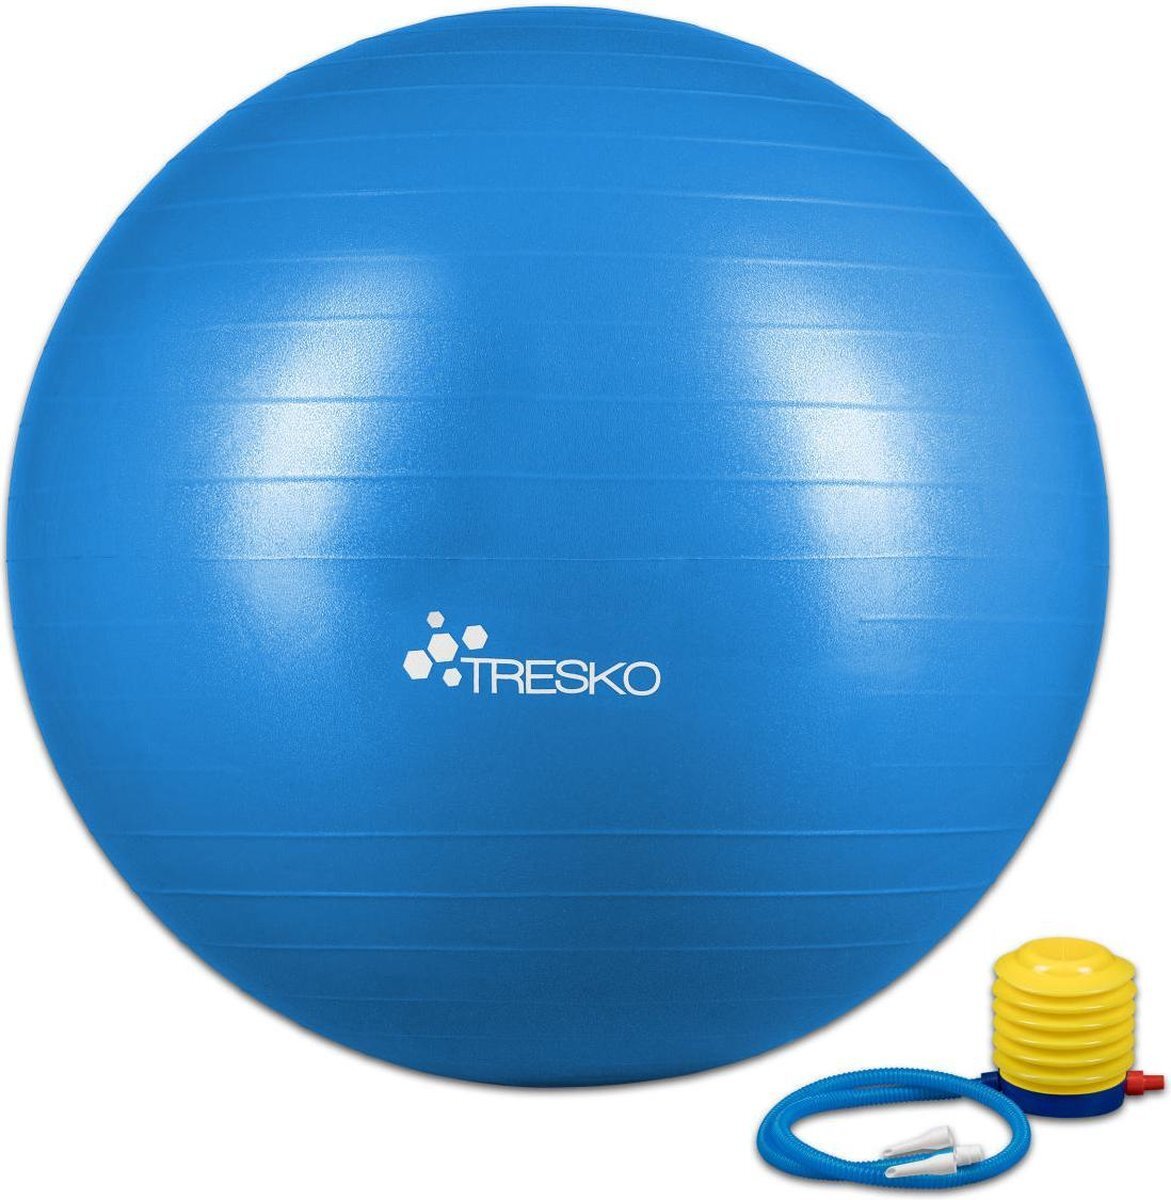 Tresko Fitnessbal met pomp - diameter 75 cm - Blauw